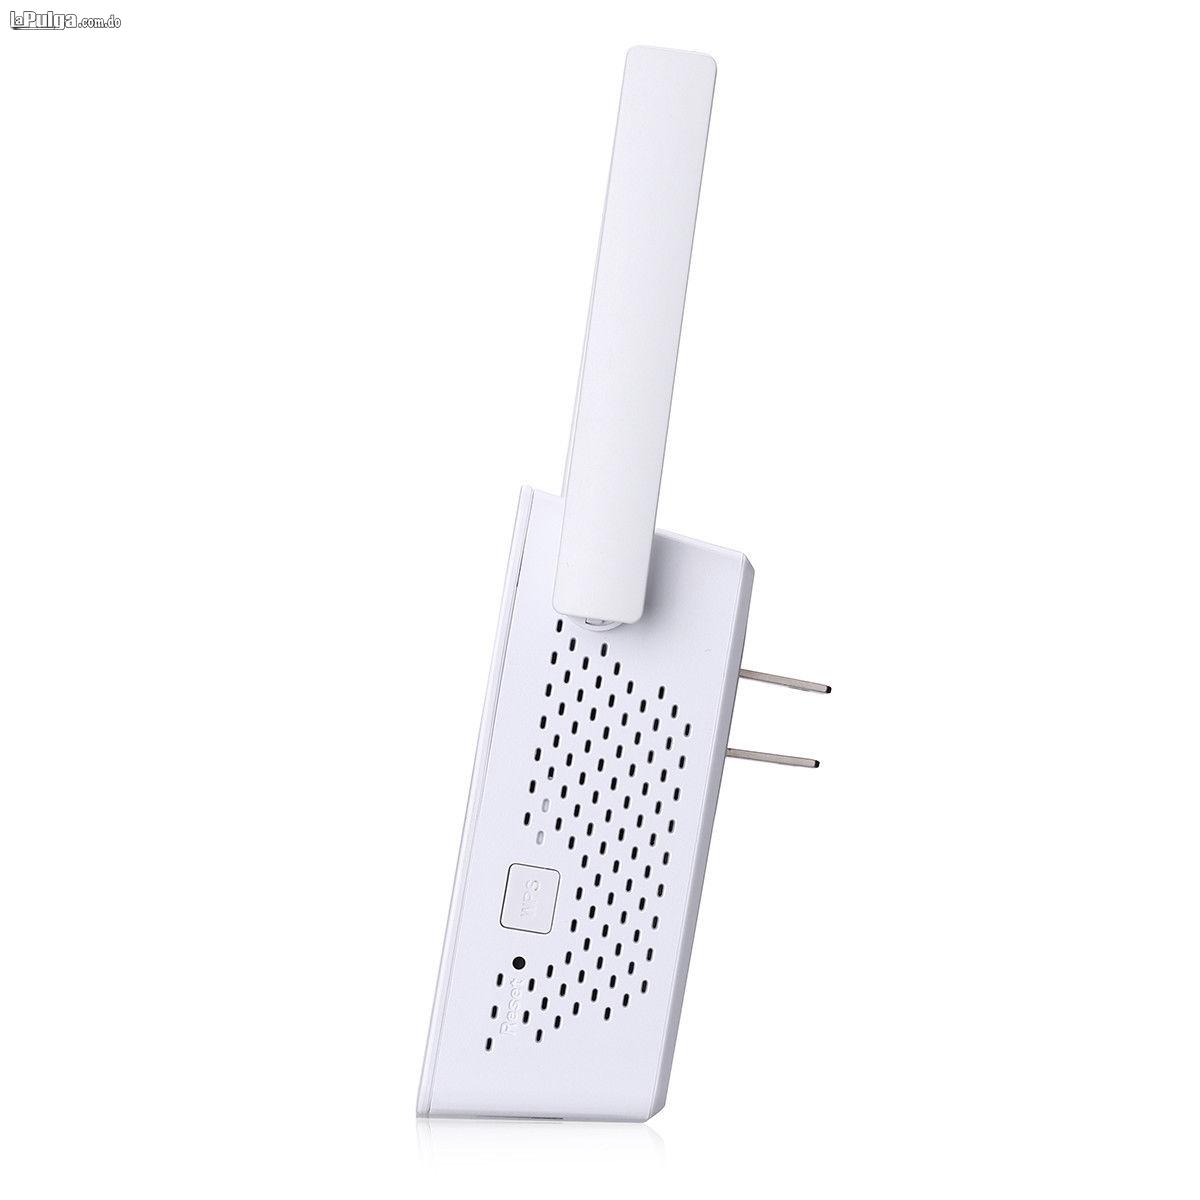 Router Repetidor Wifi Amplificador Doble Antena 300mbs Avanzado Foto 6566315-4.jpg